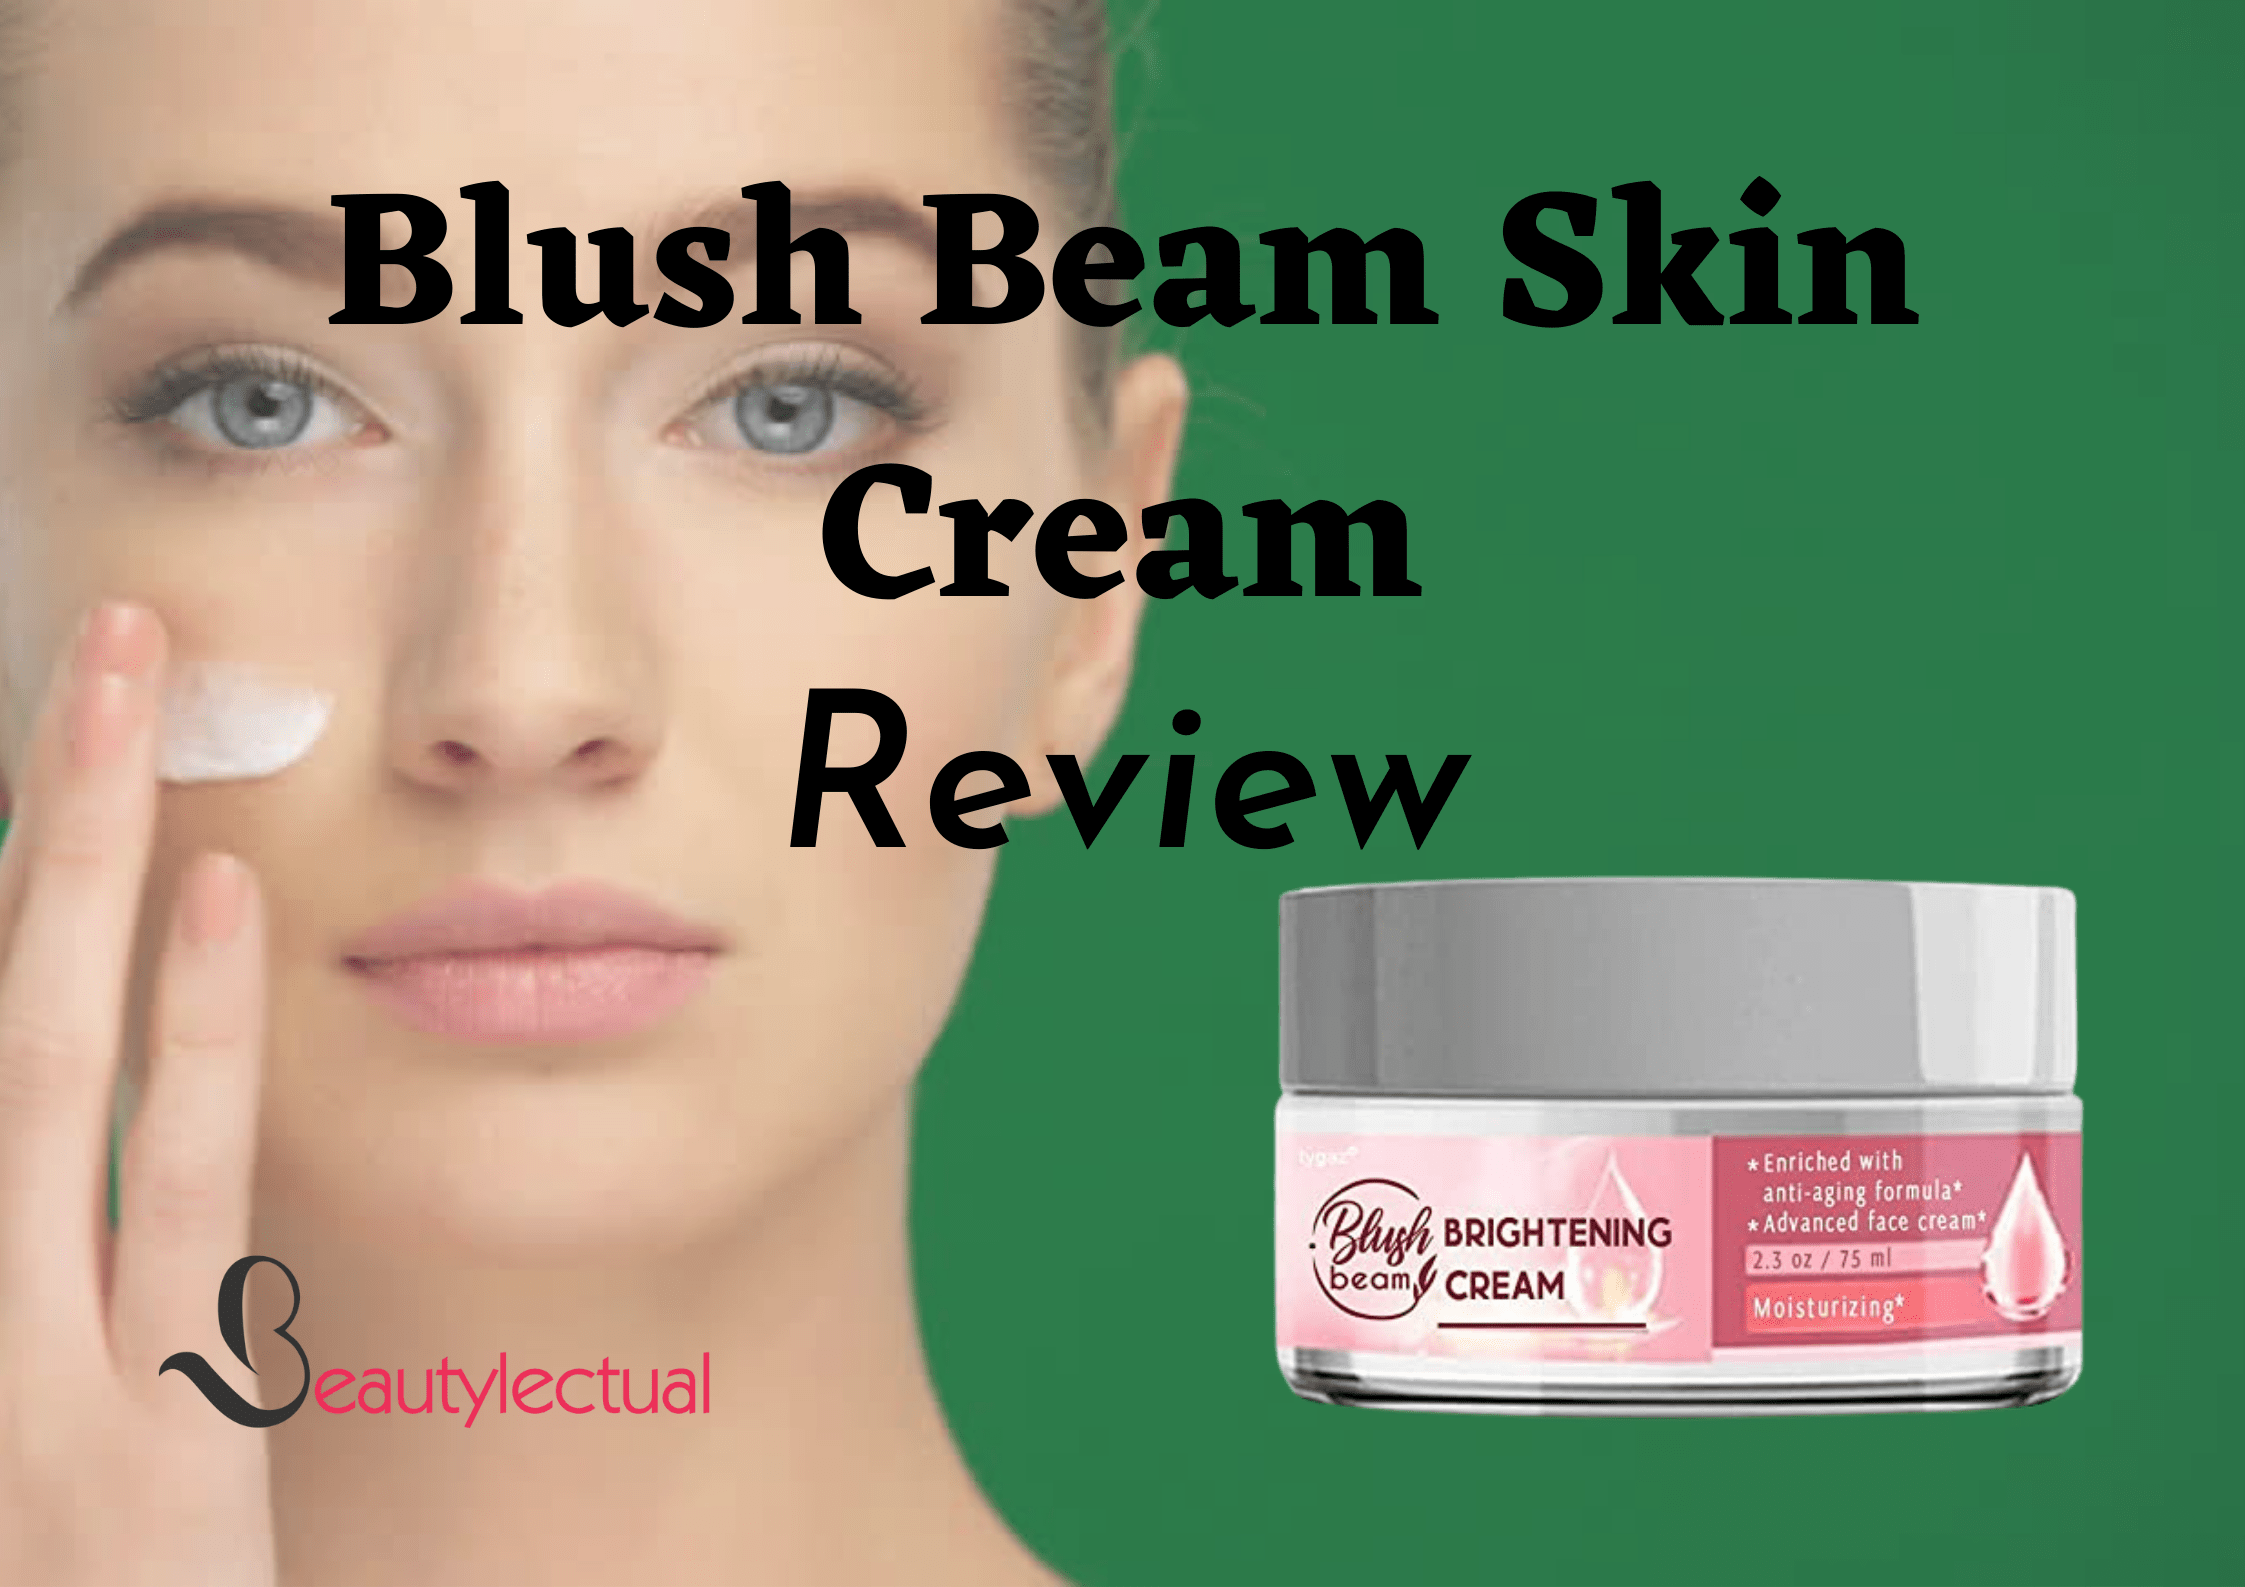 Blush Beam Skin Cream Reviews